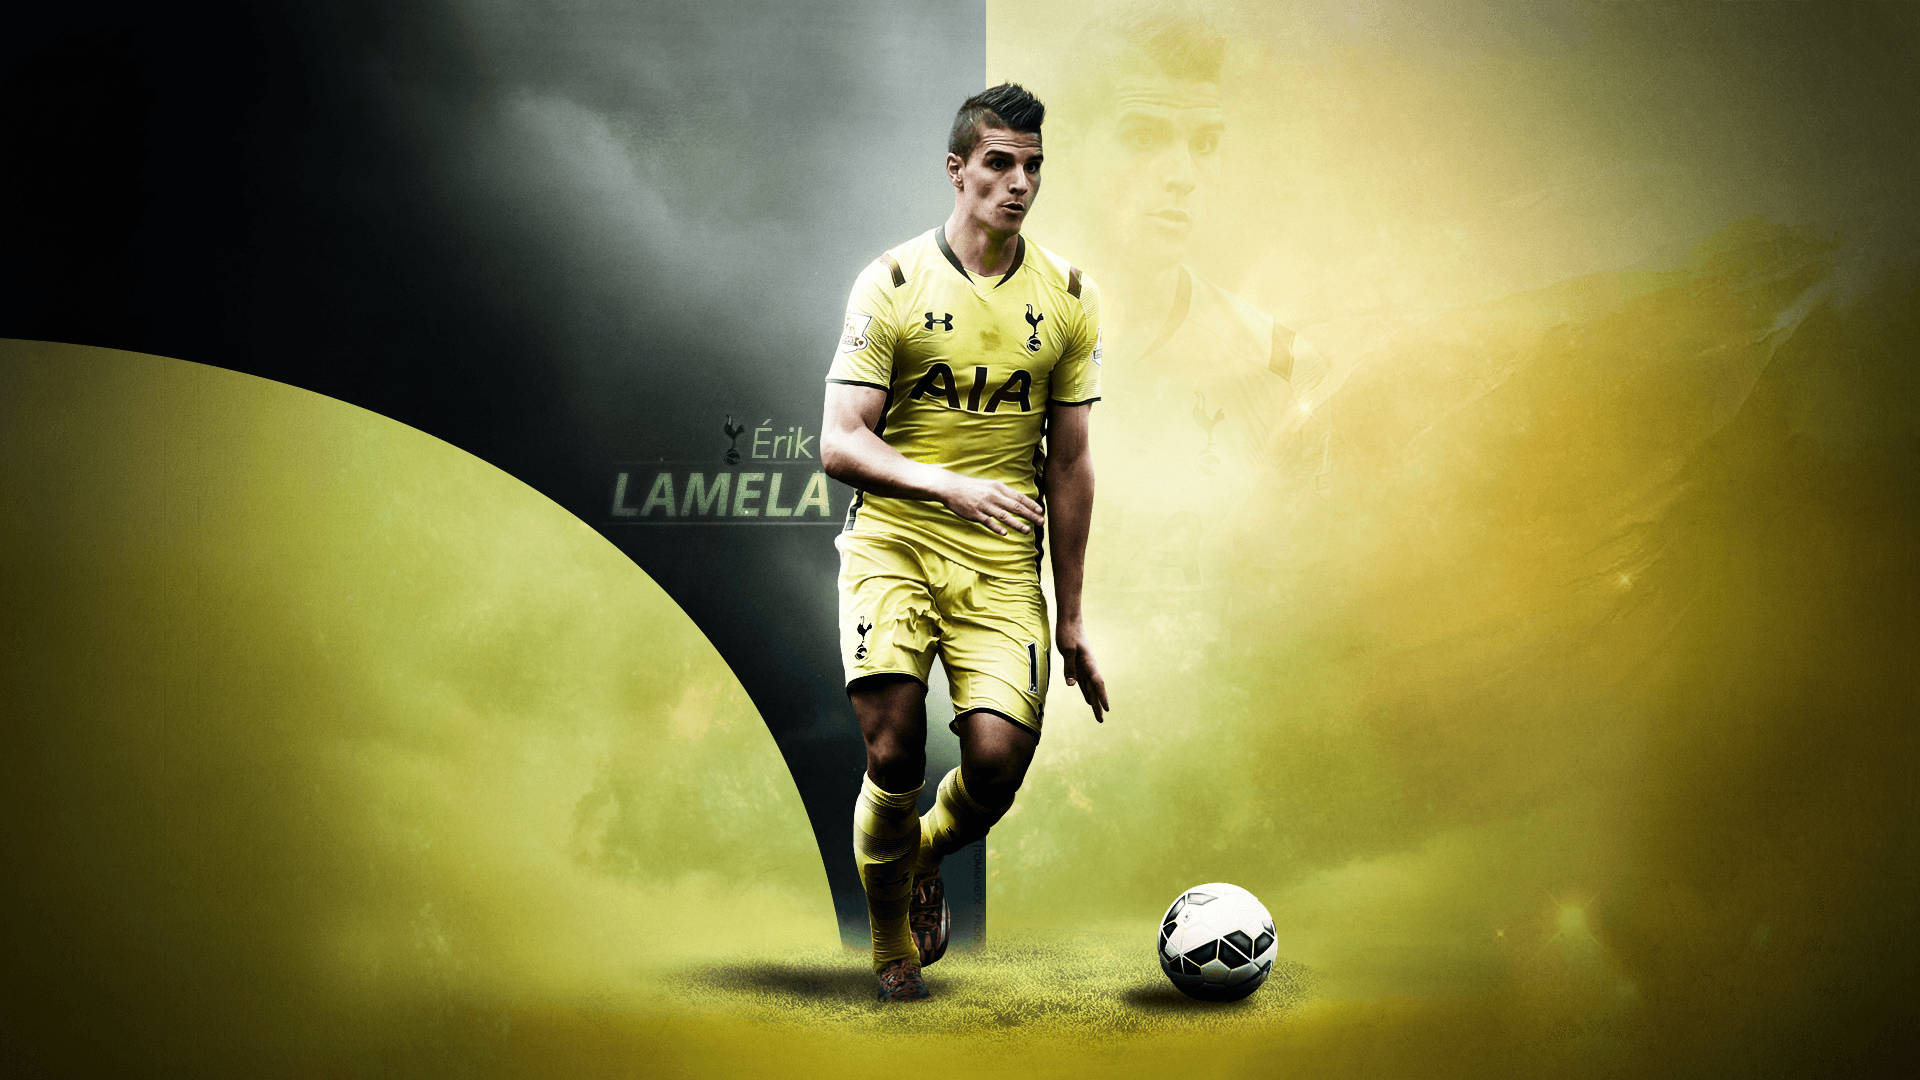 Erik Lamela All Yellow Uniform Background